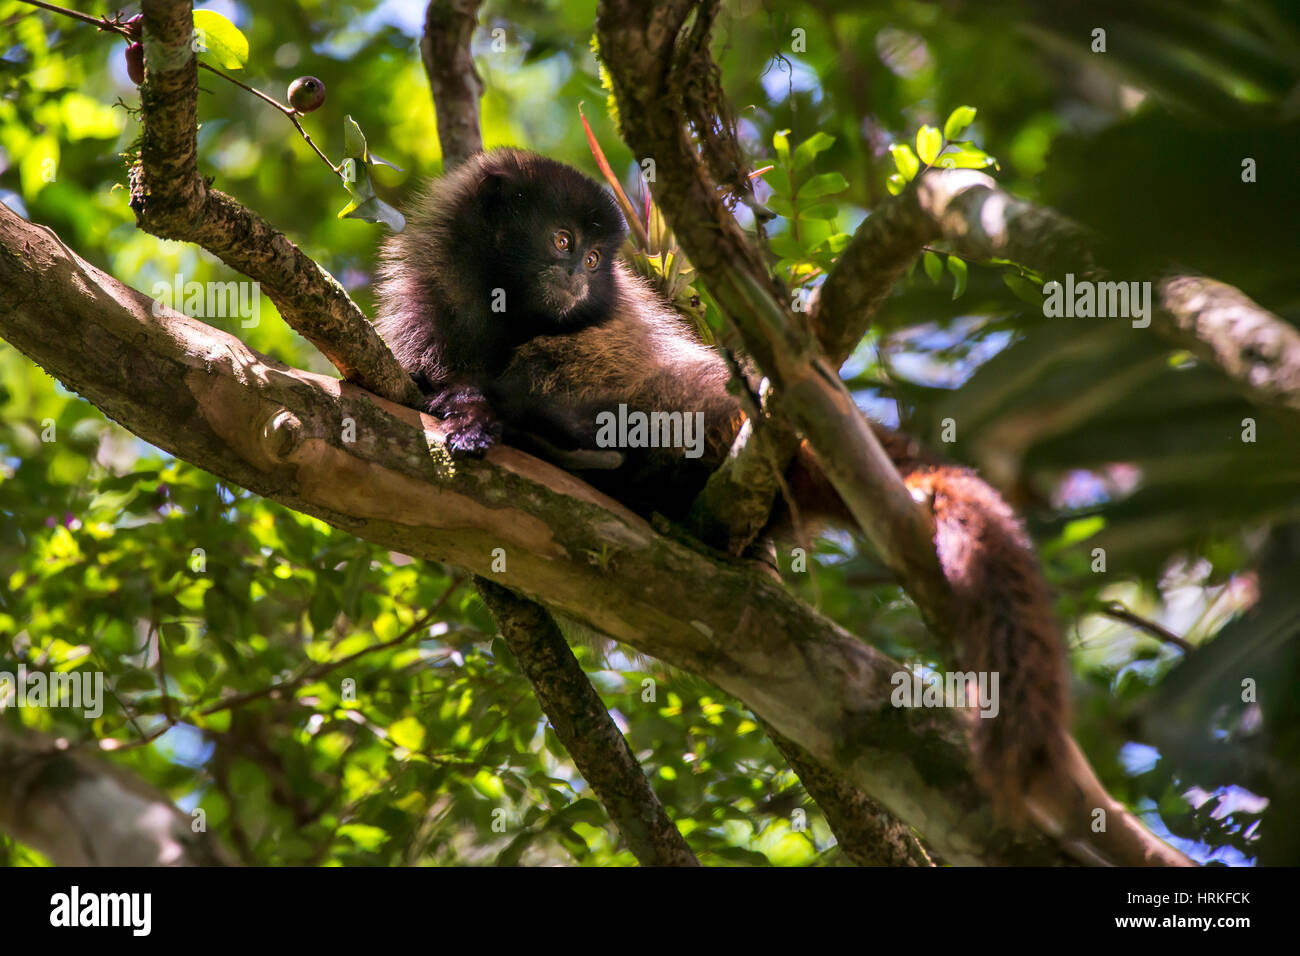 Masked titi monkey (Callicebus personatus), photographed in Santa Teresa, Espírito Santo - Brazil. Atlantic forest Biome. Wild animal. Stock Photo